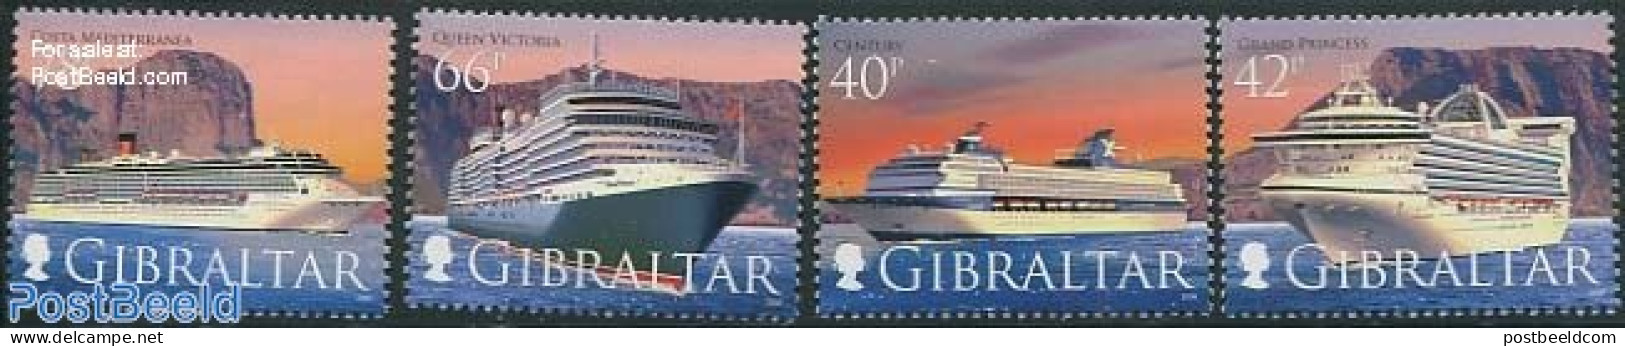 Gibraltar 2008 Cruise Ships 4v, Mint NH, Transport - Ships And Boats - Ships